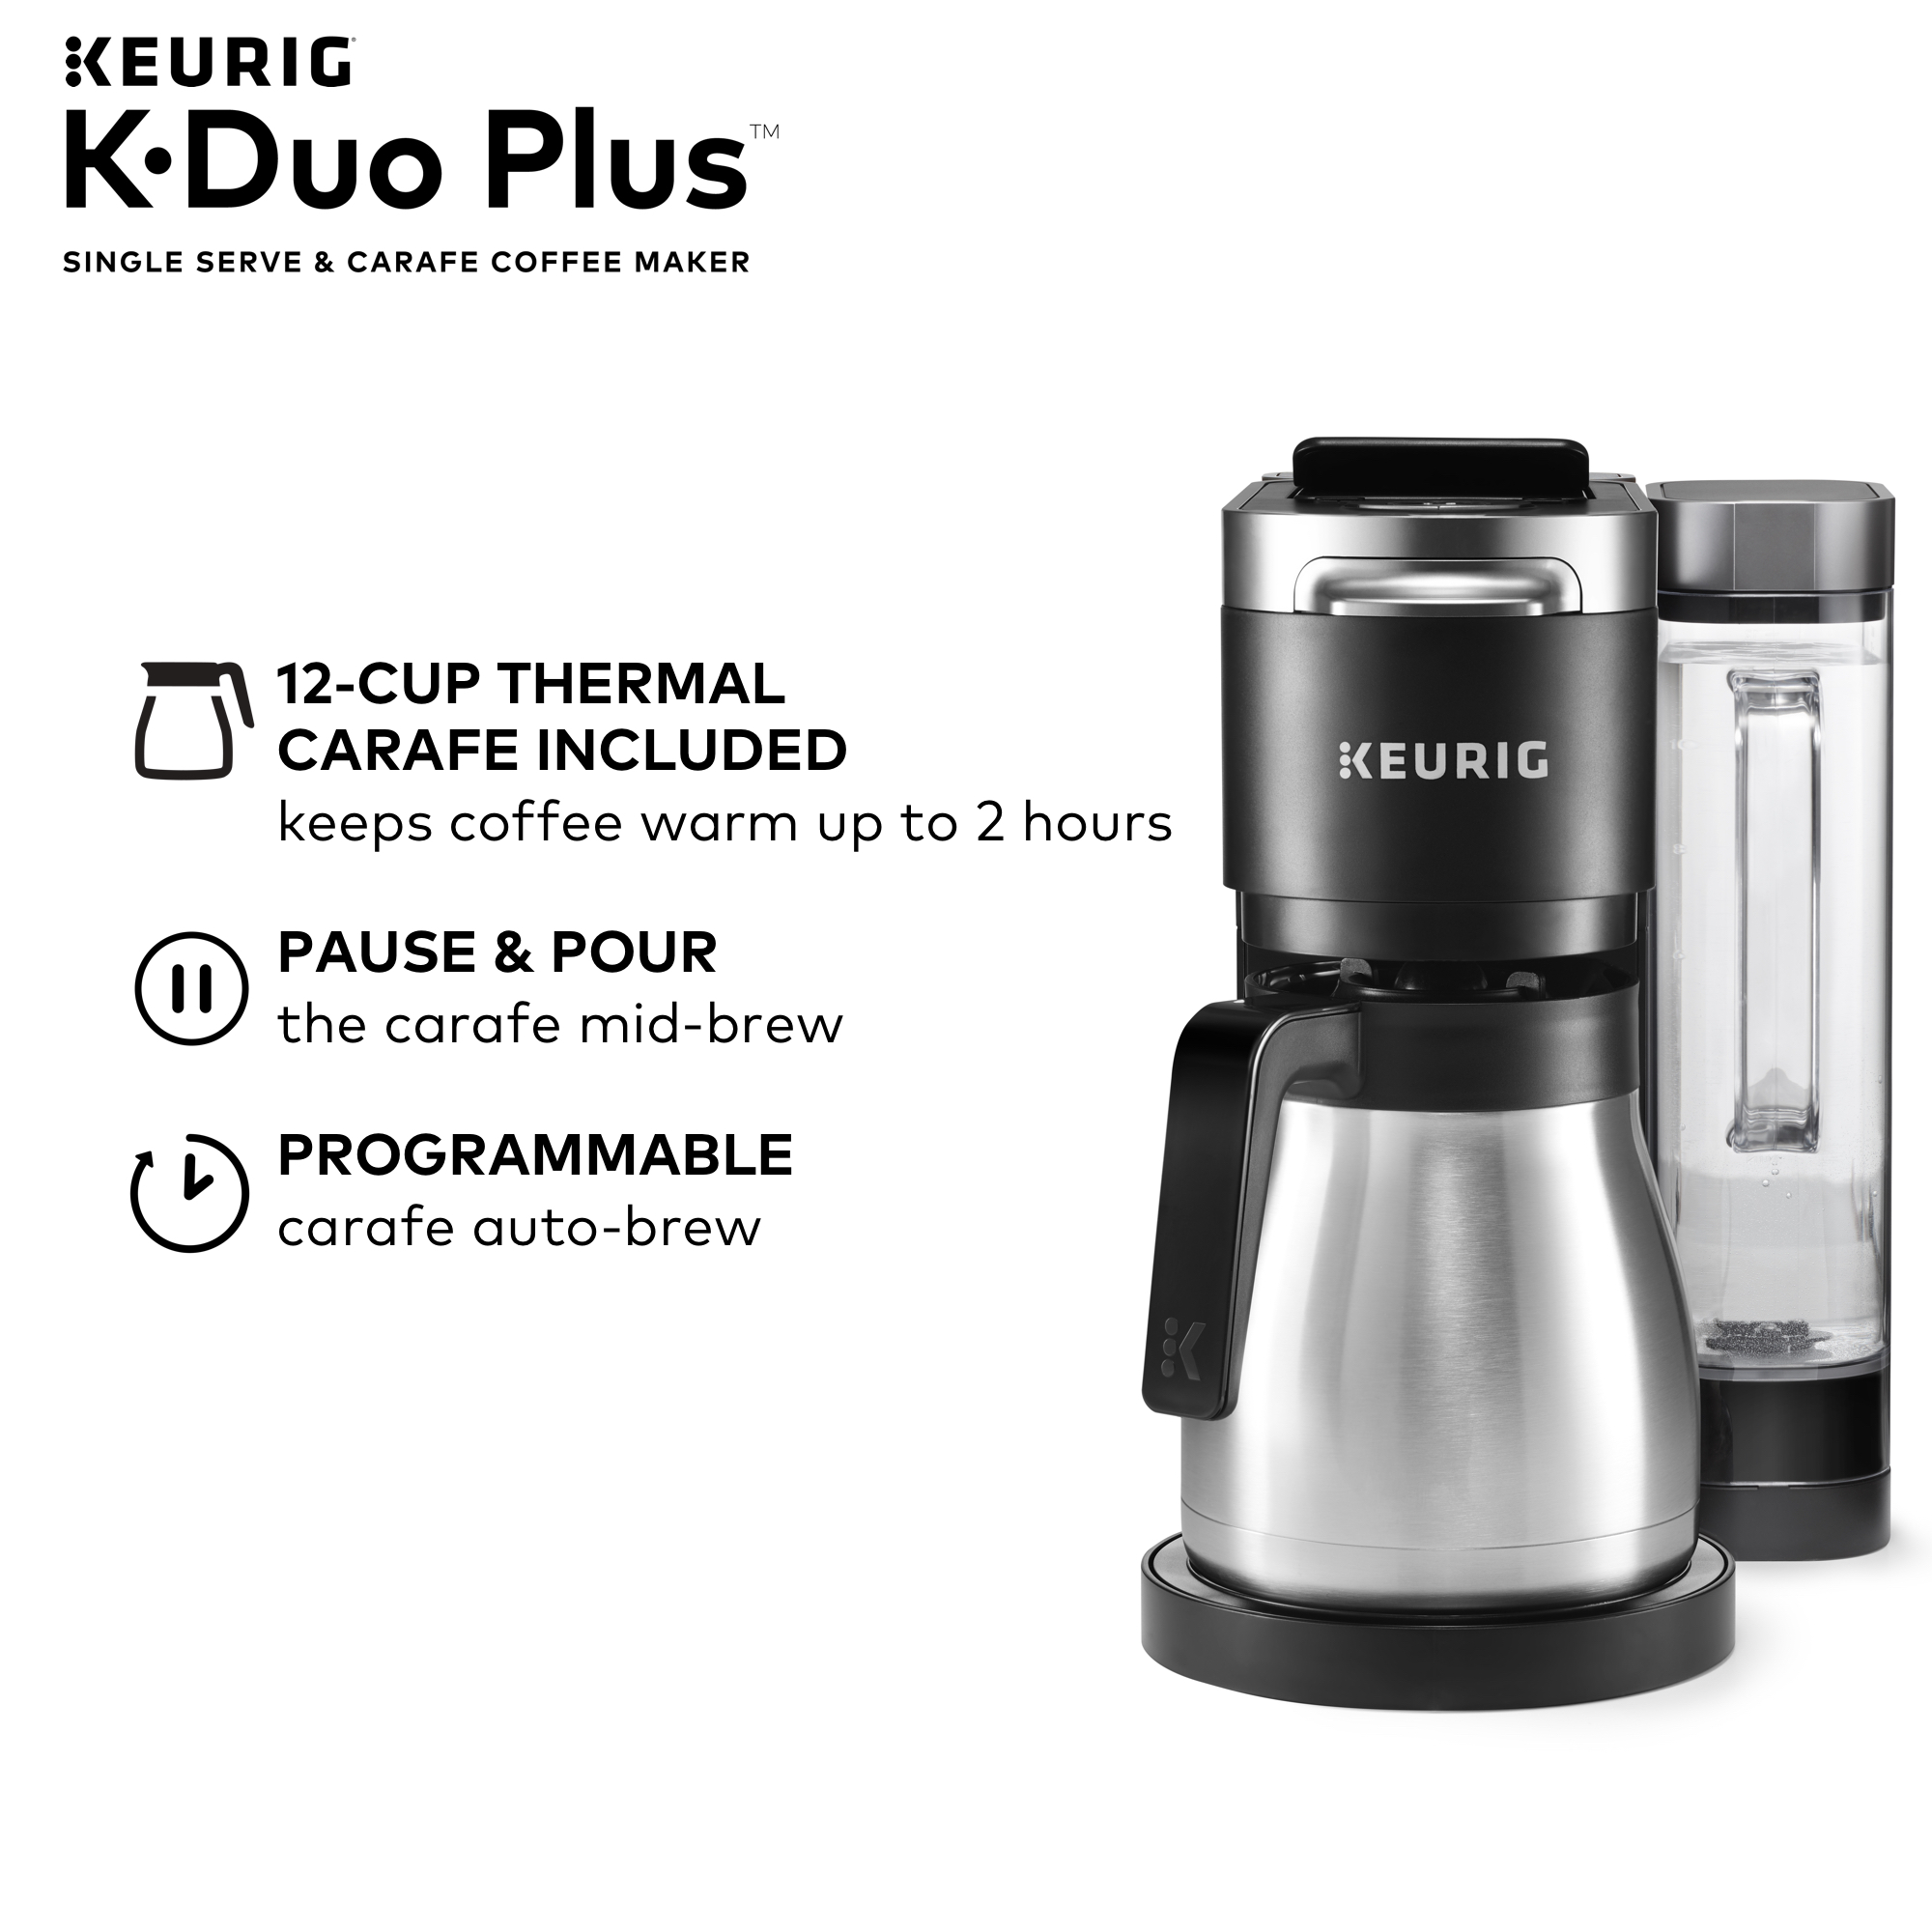 Keurig K-Duo Plus Single Serve & Carafe Coffee Maker - image 9 of 24